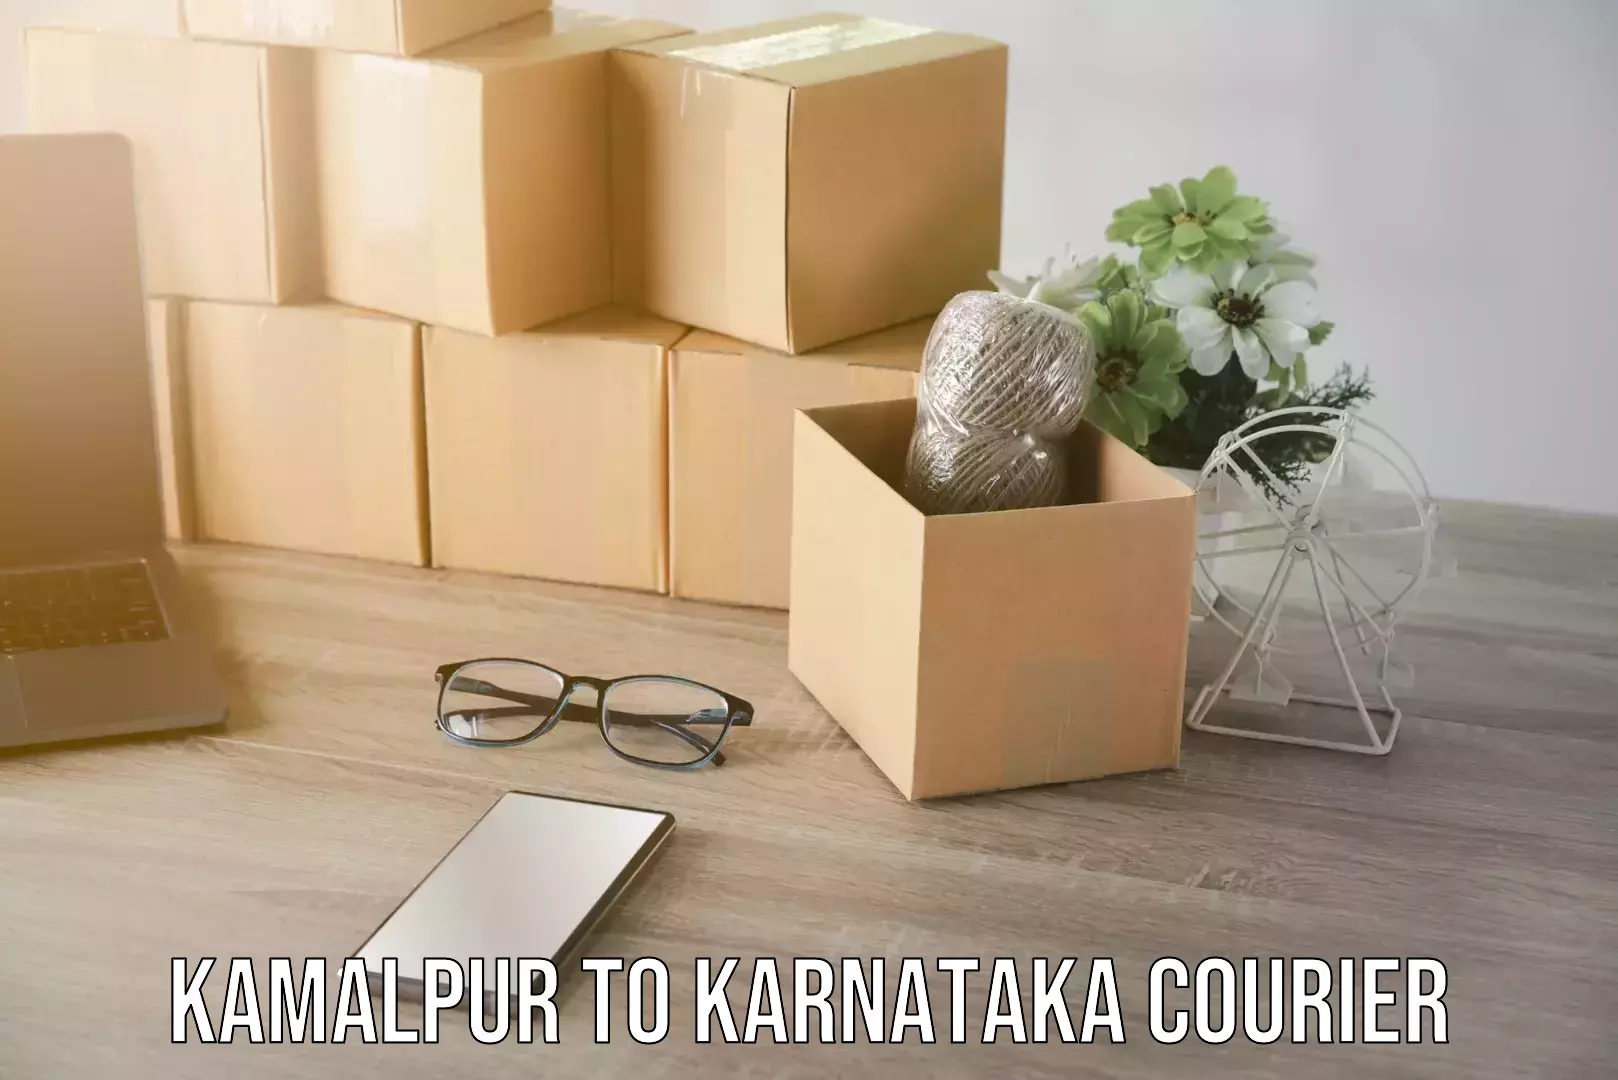 Enhanced tracking features Kamalpur to Karnataka